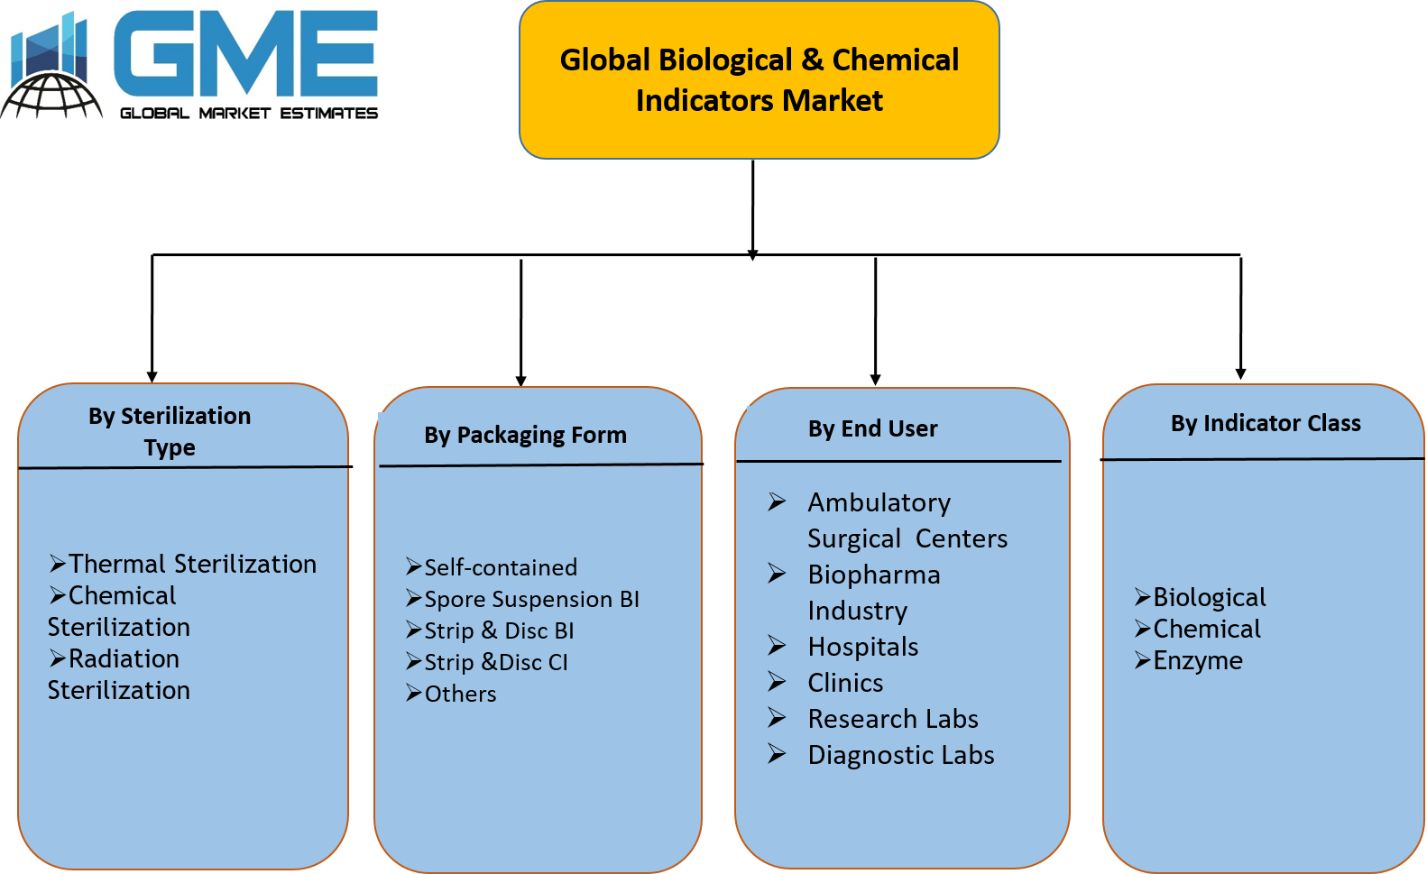 Global Biological & Chemical Indicators Market